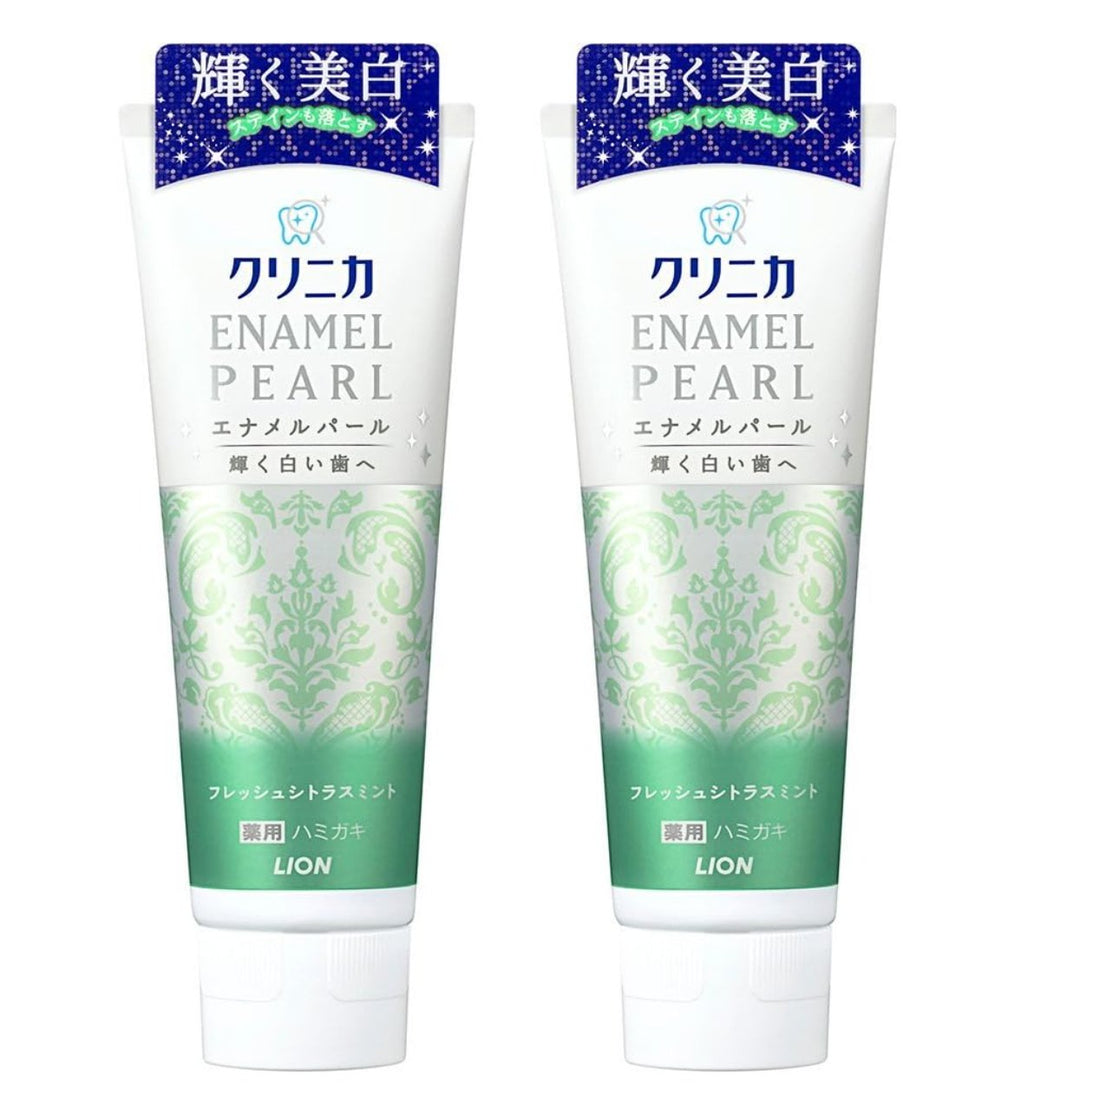 Clinica [Quasi-drug] Enamel Pearl Toothpaste Fresh Citrus Mint 130g x 2 - NihonMura